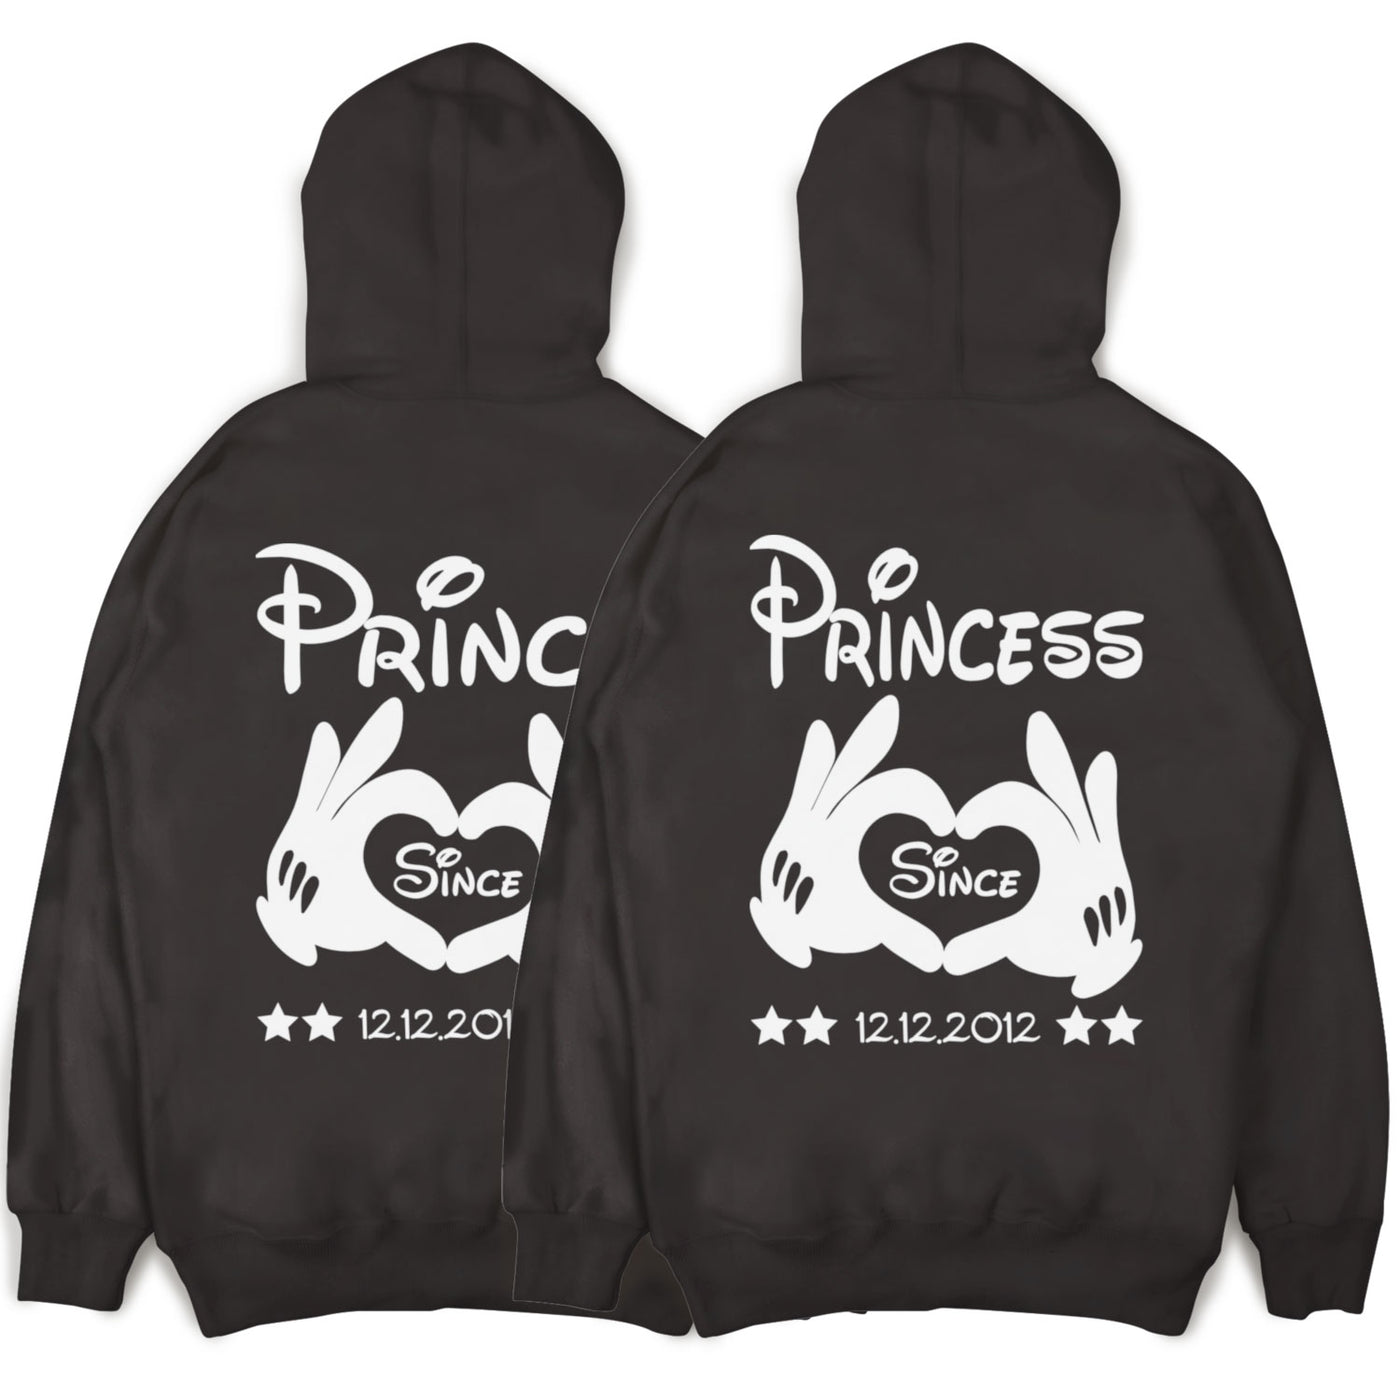 prince-princess-hoodie-drkgry-ft108hod